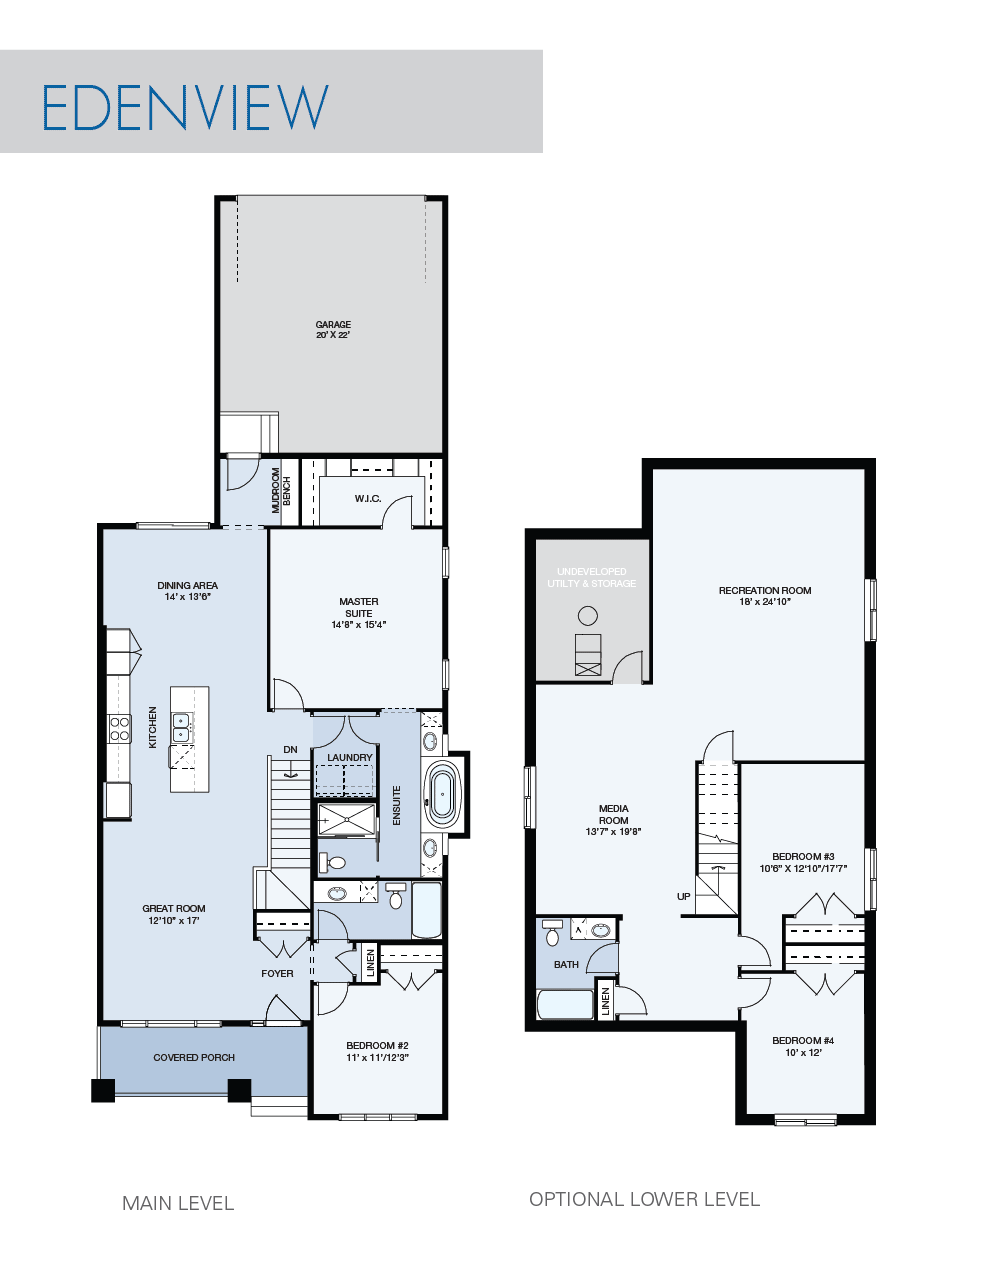 Edenview floorplan